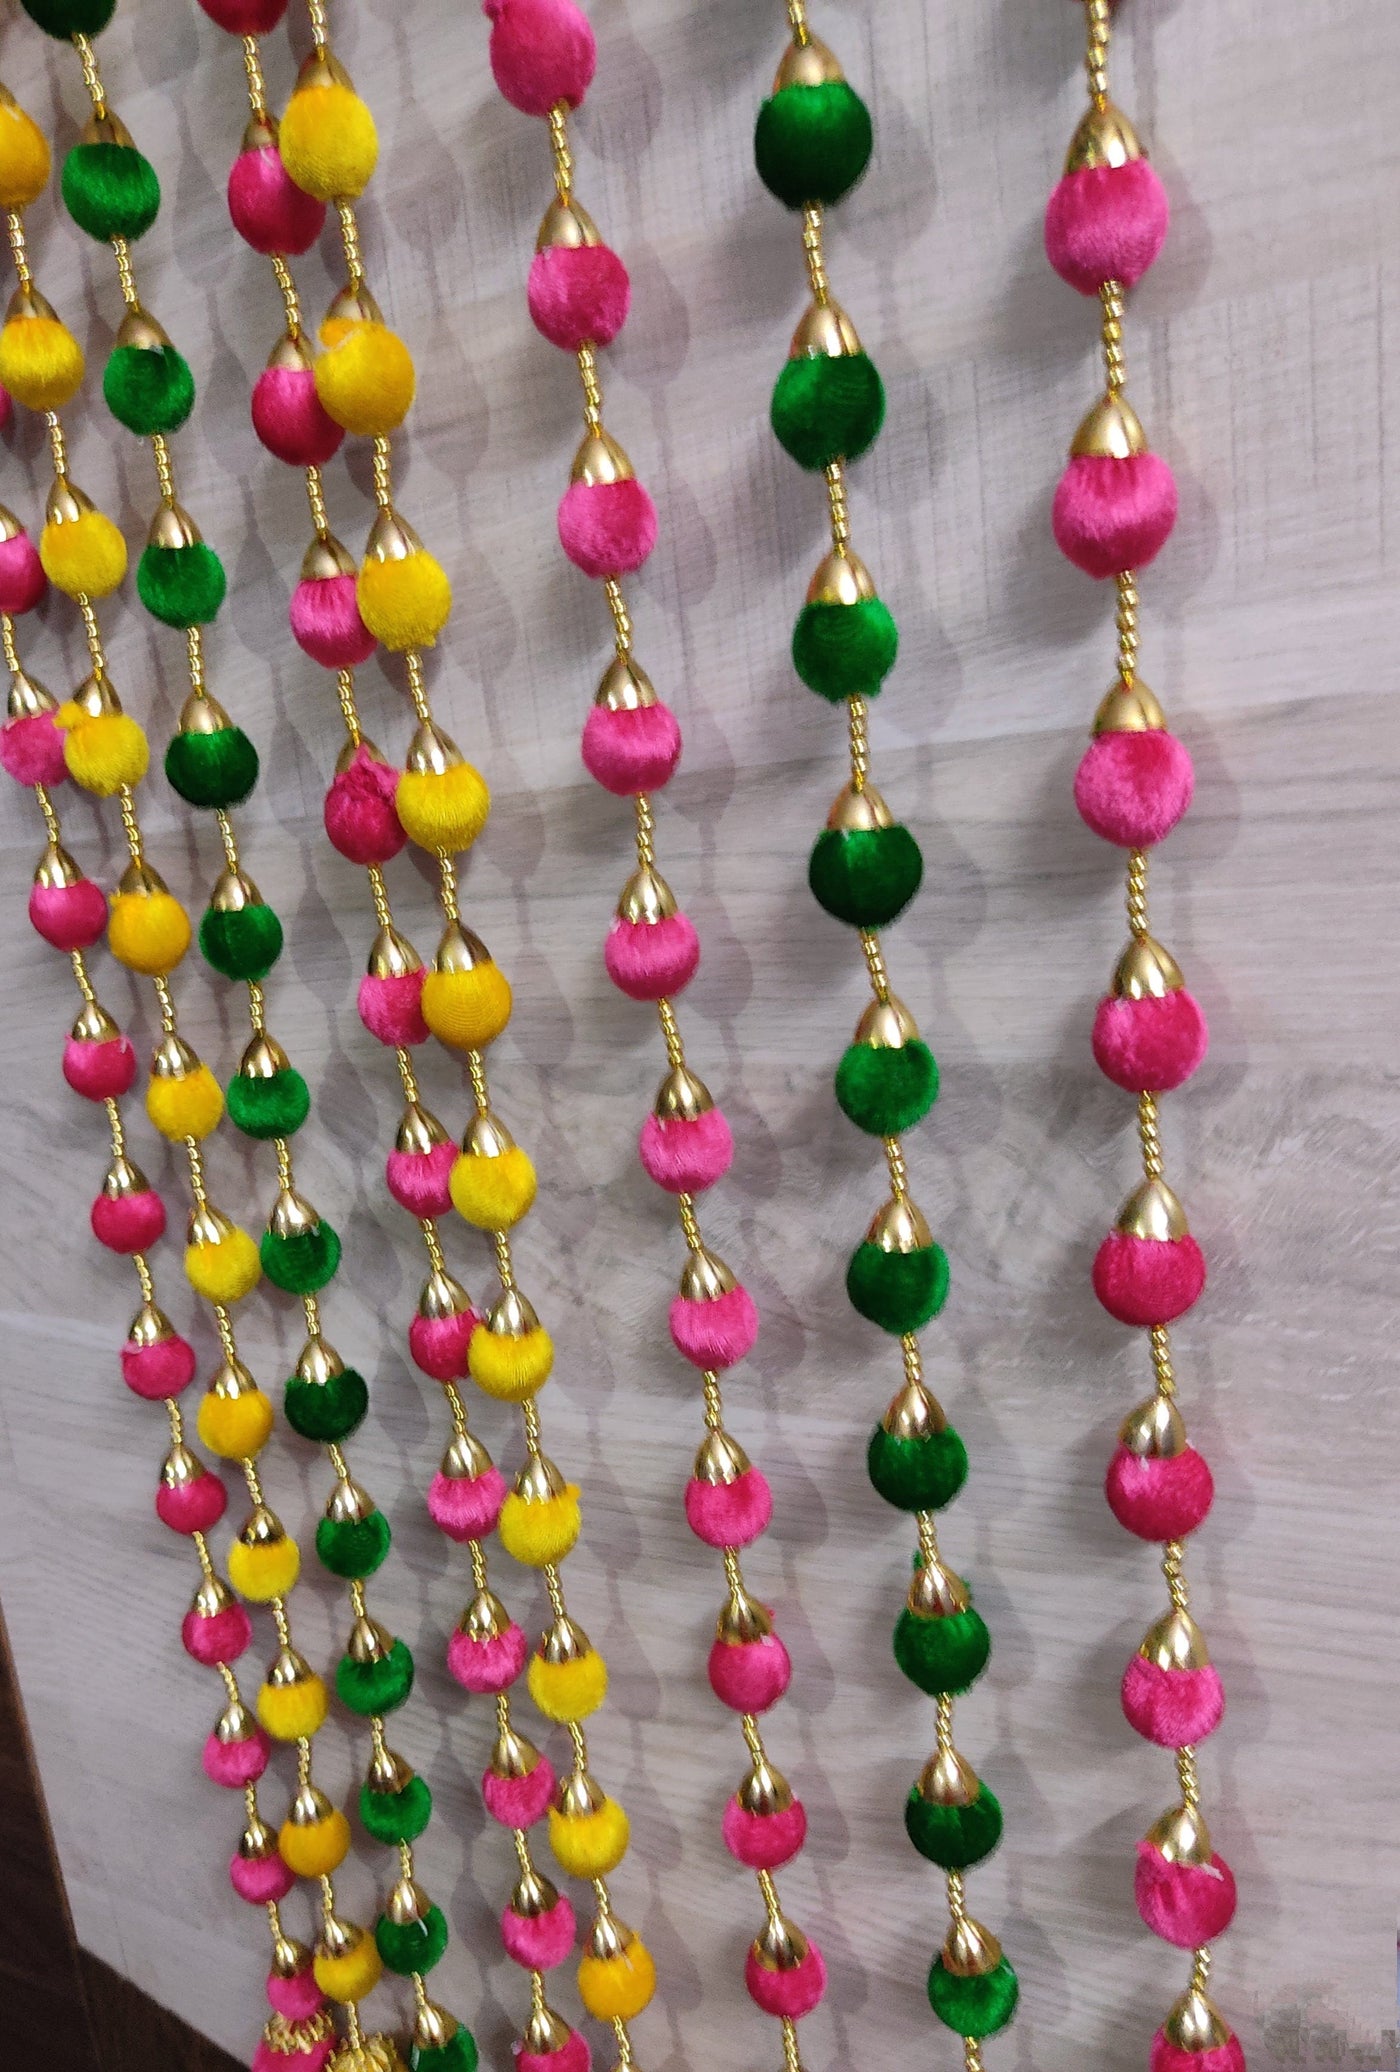 LAMANSH decor Hangings LAMANSH® (Pack of 20) 3.5 Ft height New Decorative Gota Balls Hangings with Golden pearls / Designer Hangings for Event decoration , Diwali & Navratri Decoration